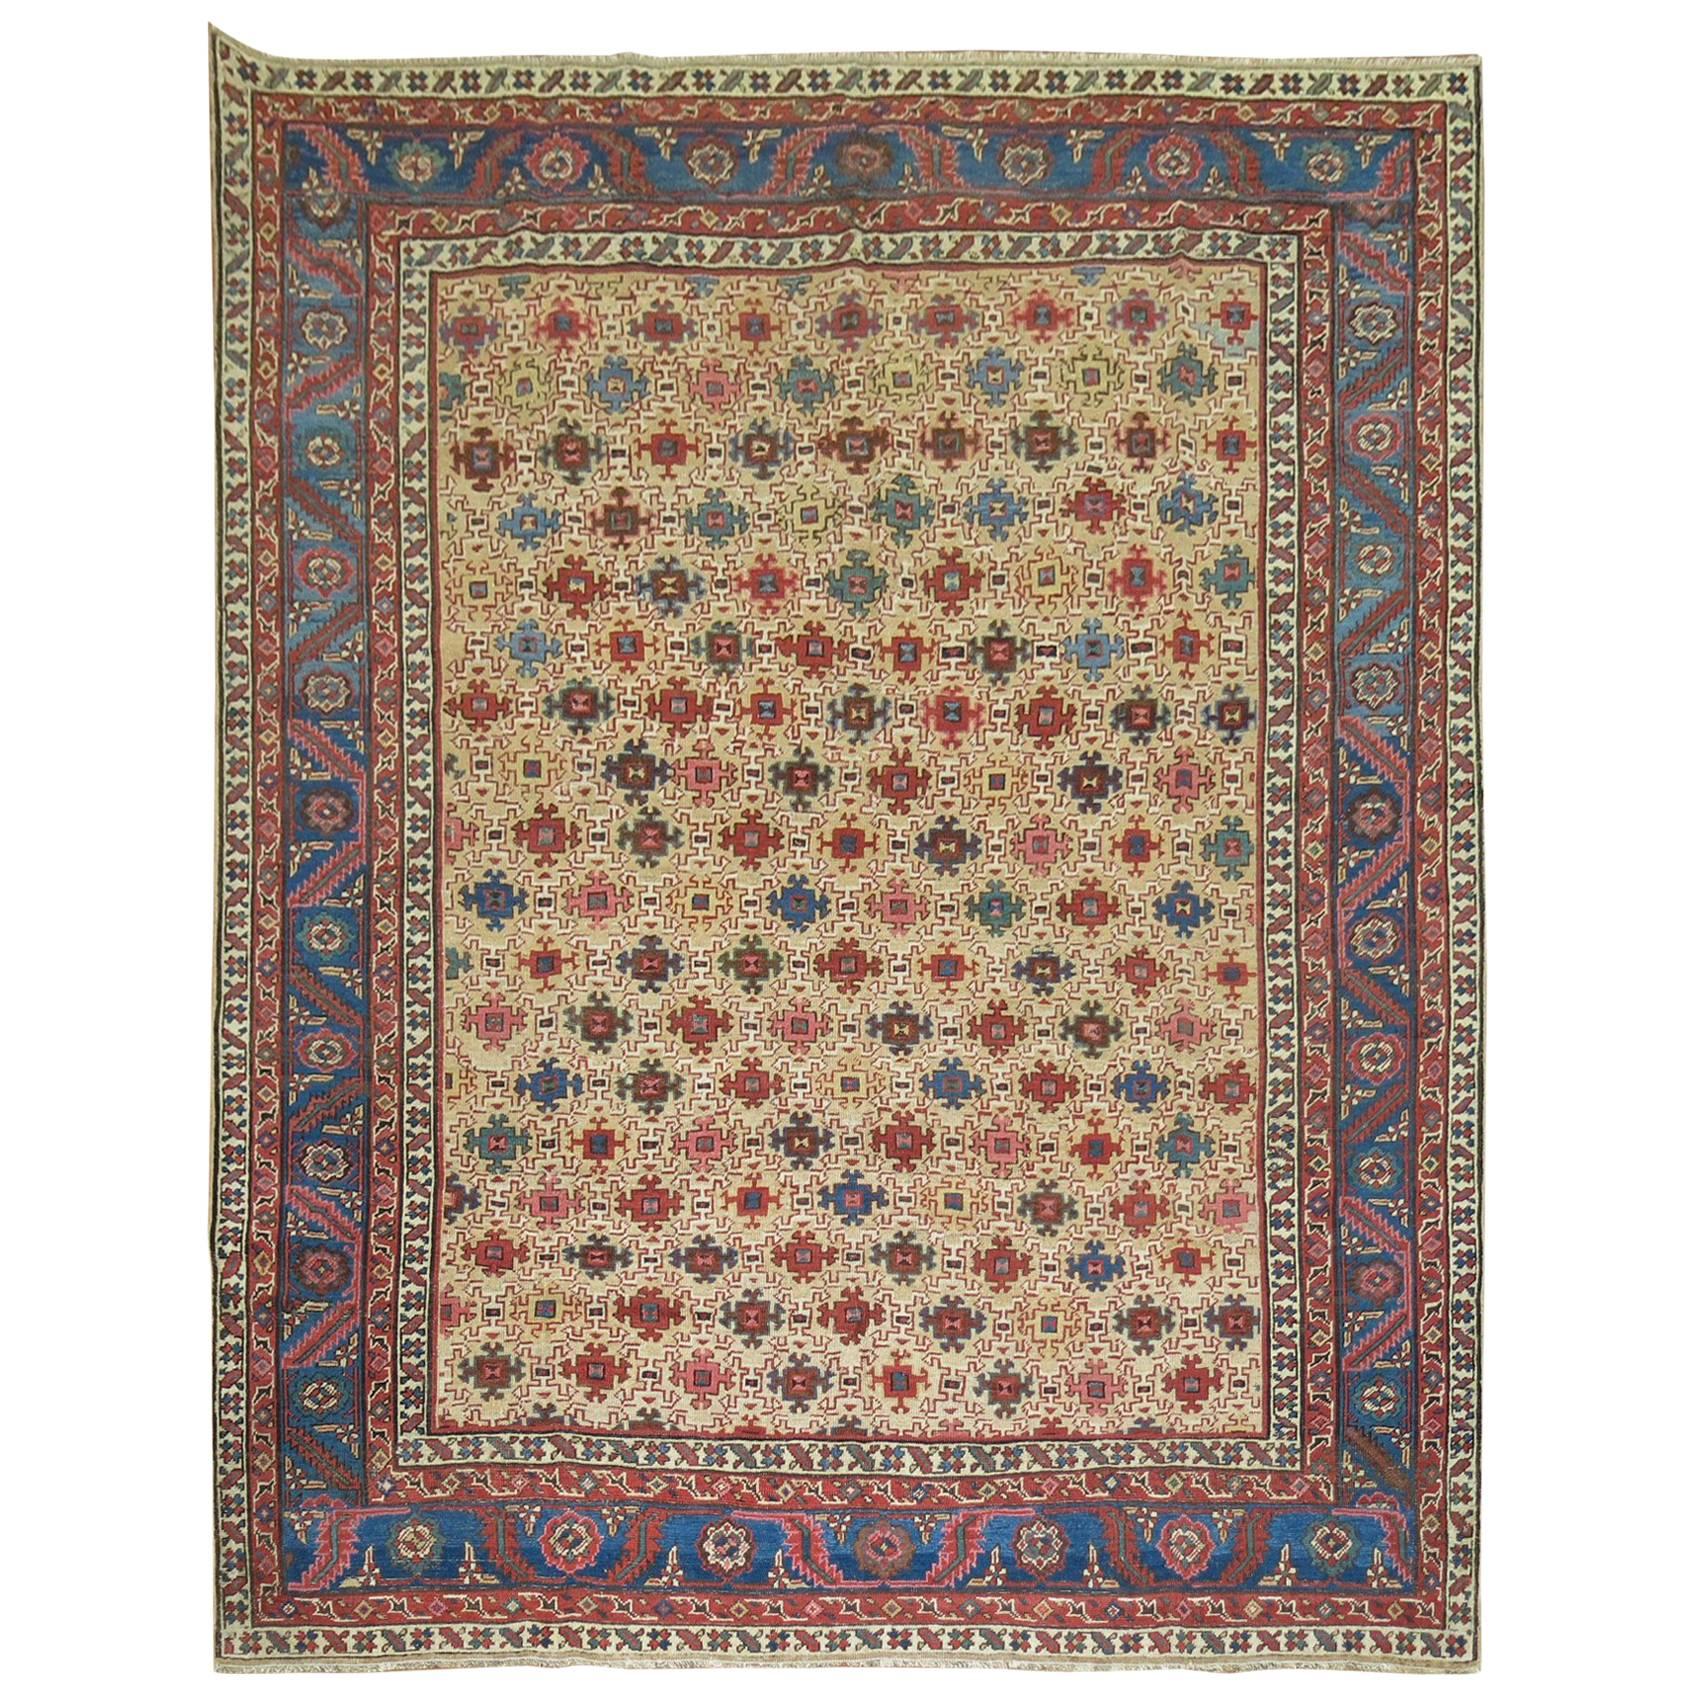 Antiker quadratischer persischer Bakshaish-Teppich